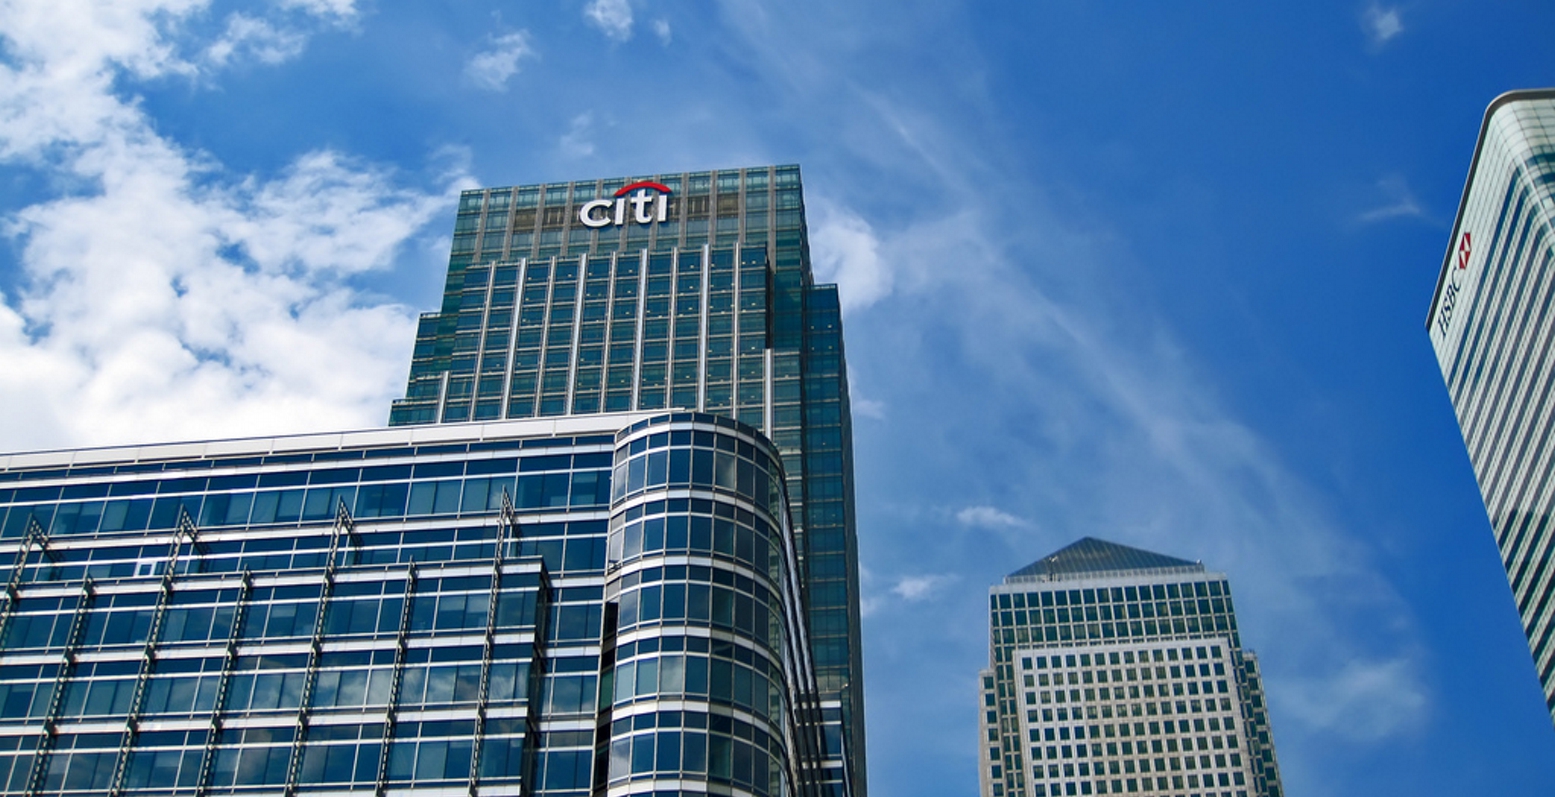 Citigroup. Лондон Скай Билдинг. Citigroup Center. Canary Wharf Tower.